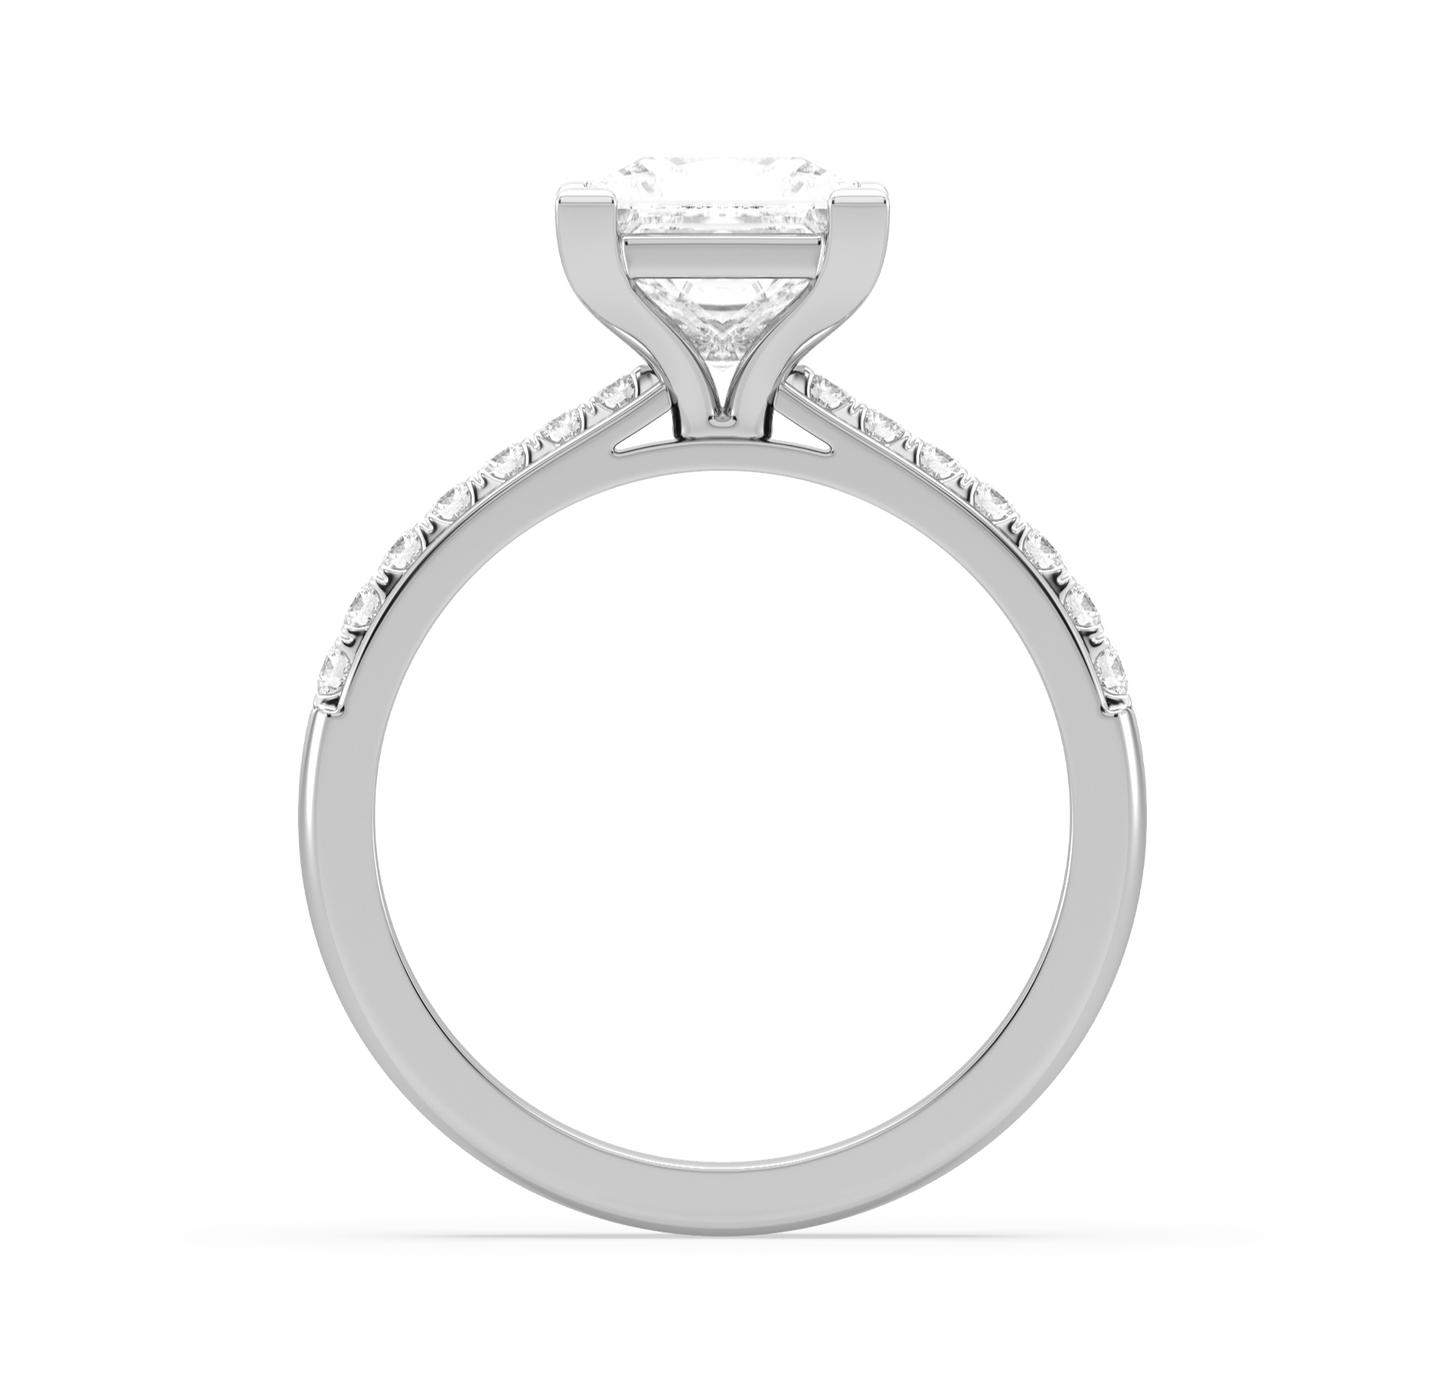 Customised ring RG21009-PH21006